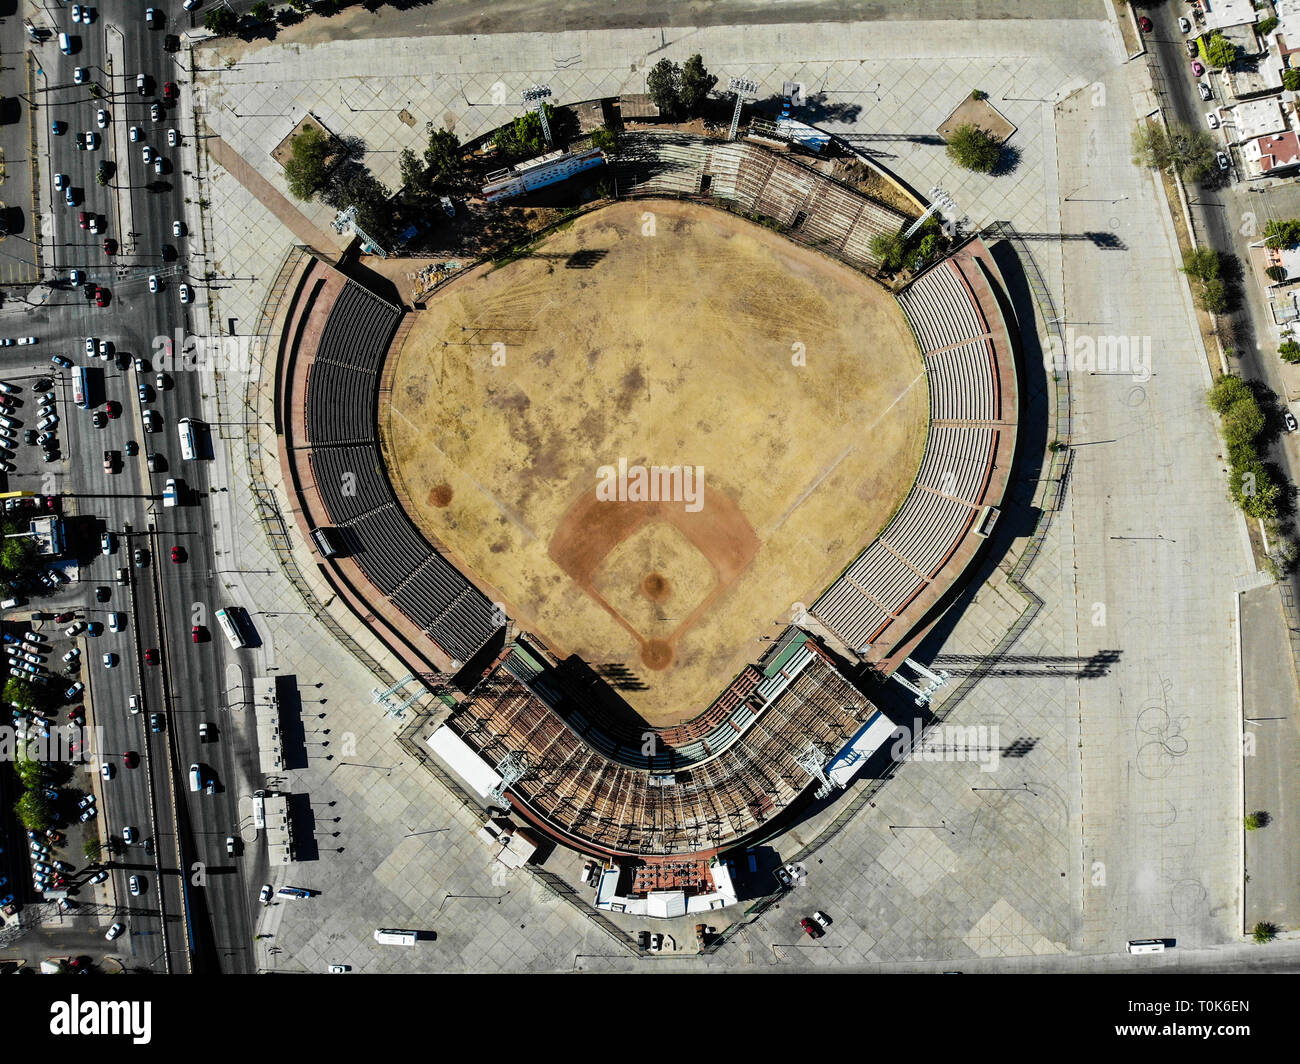 Beisbol invernal fotografías e imágenes de alta resolución - Alamy